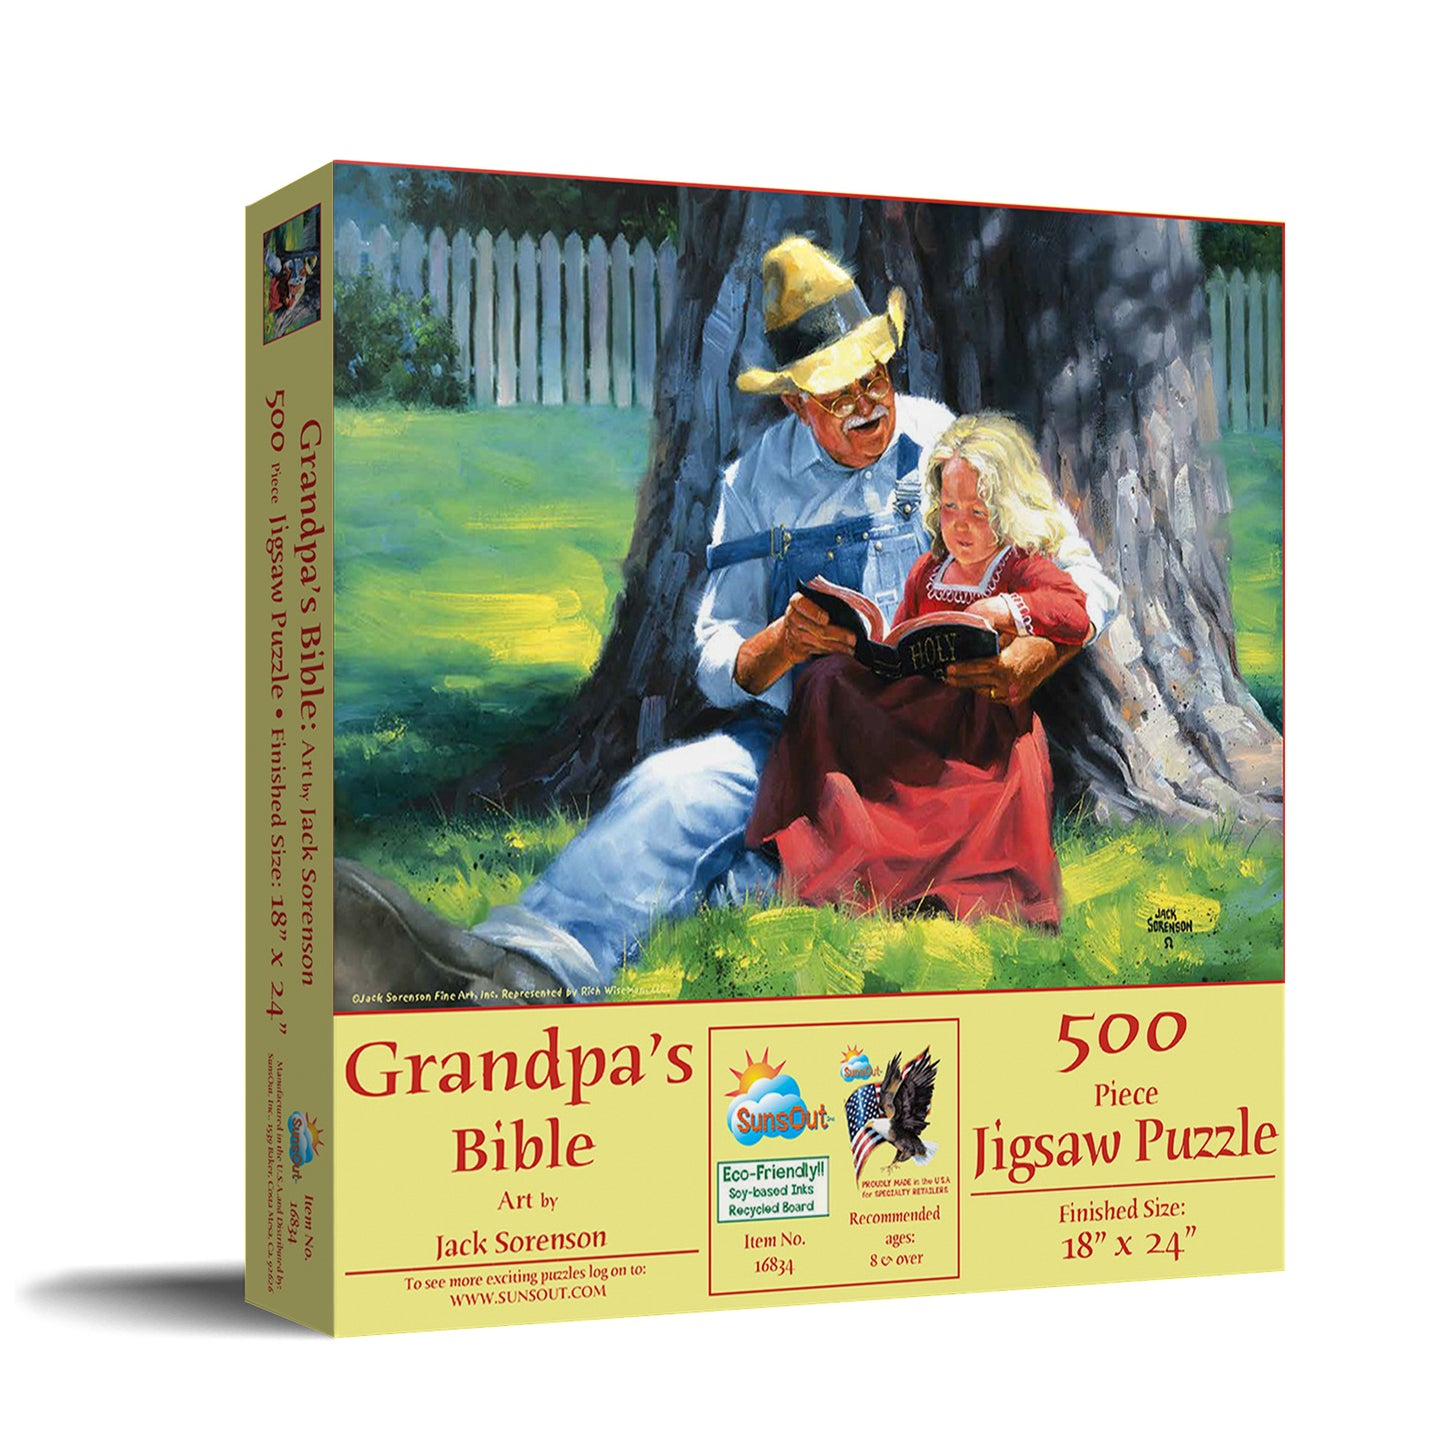 Grandpa's Bible - 500 Piece Jigsaw Puzzle